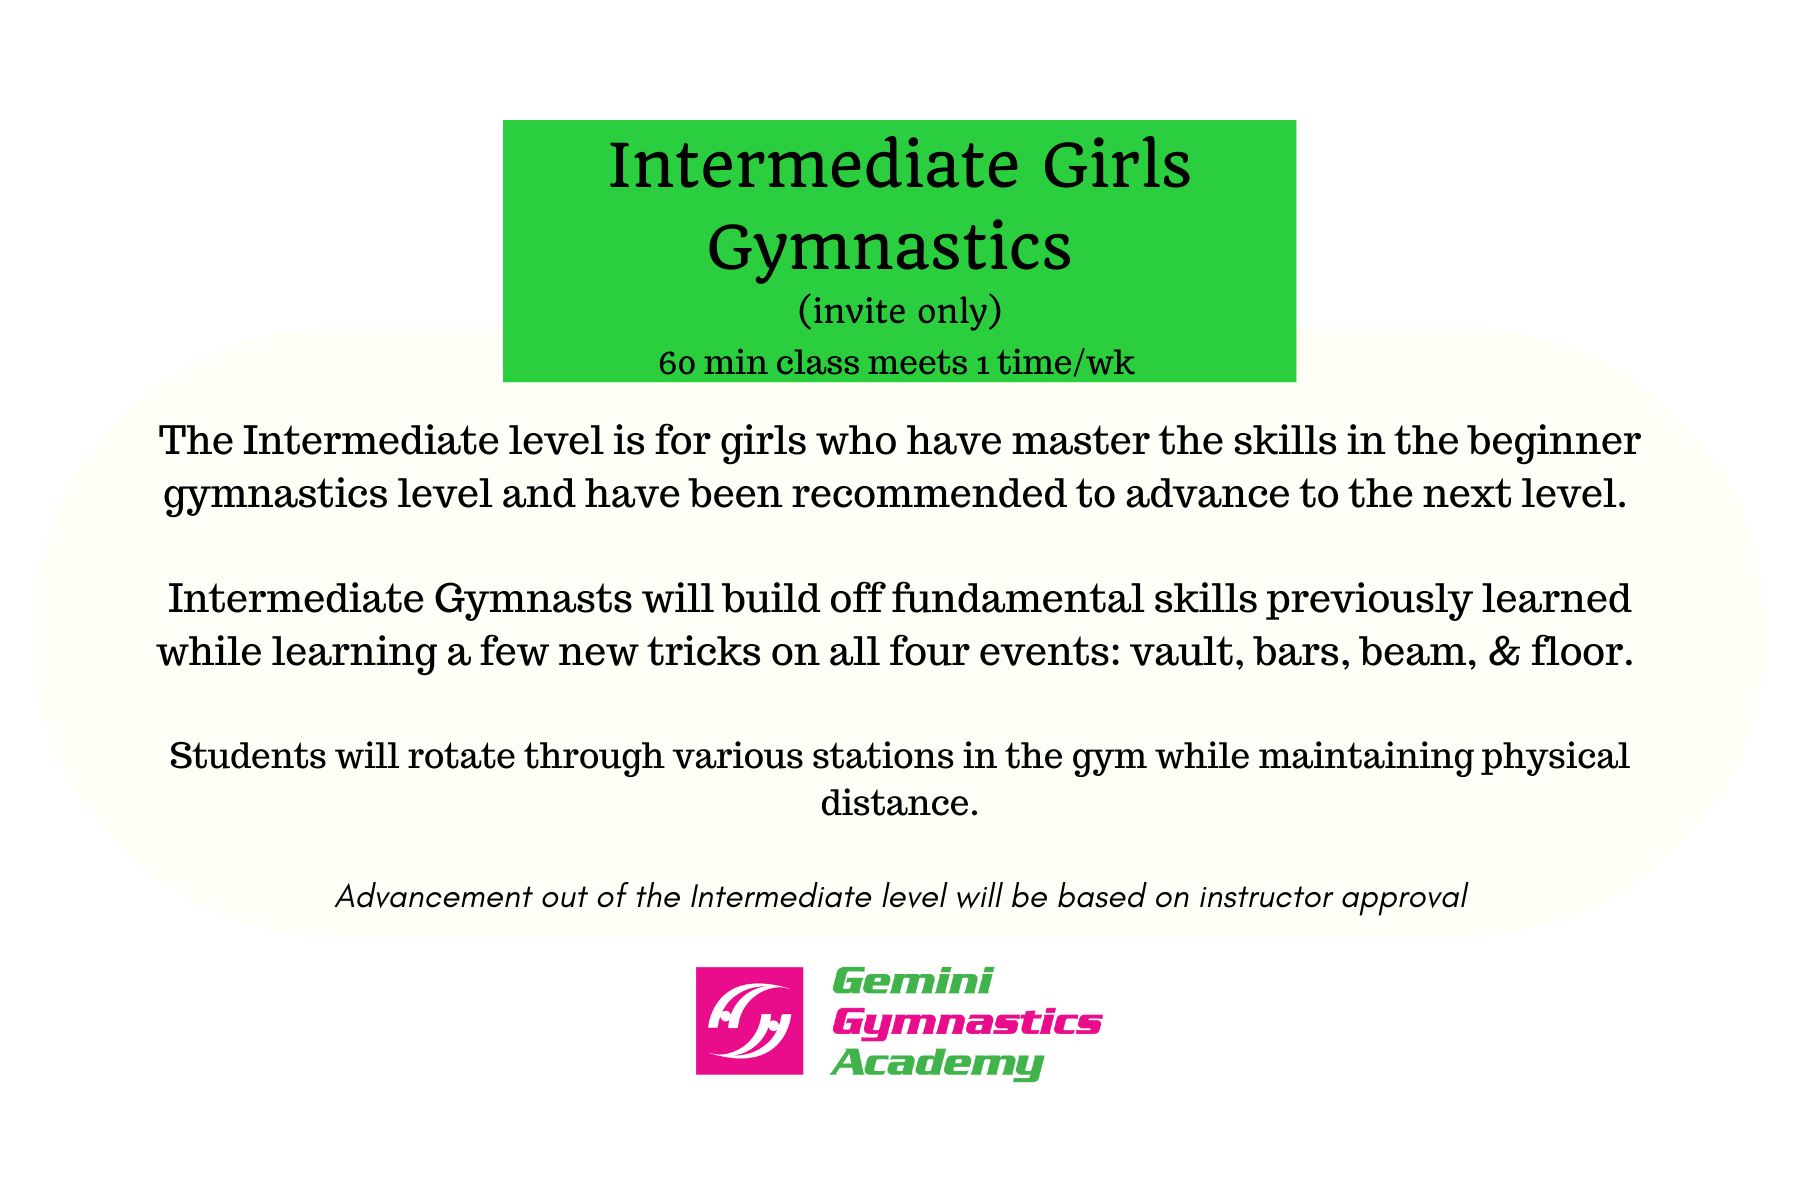 Int gymnastics